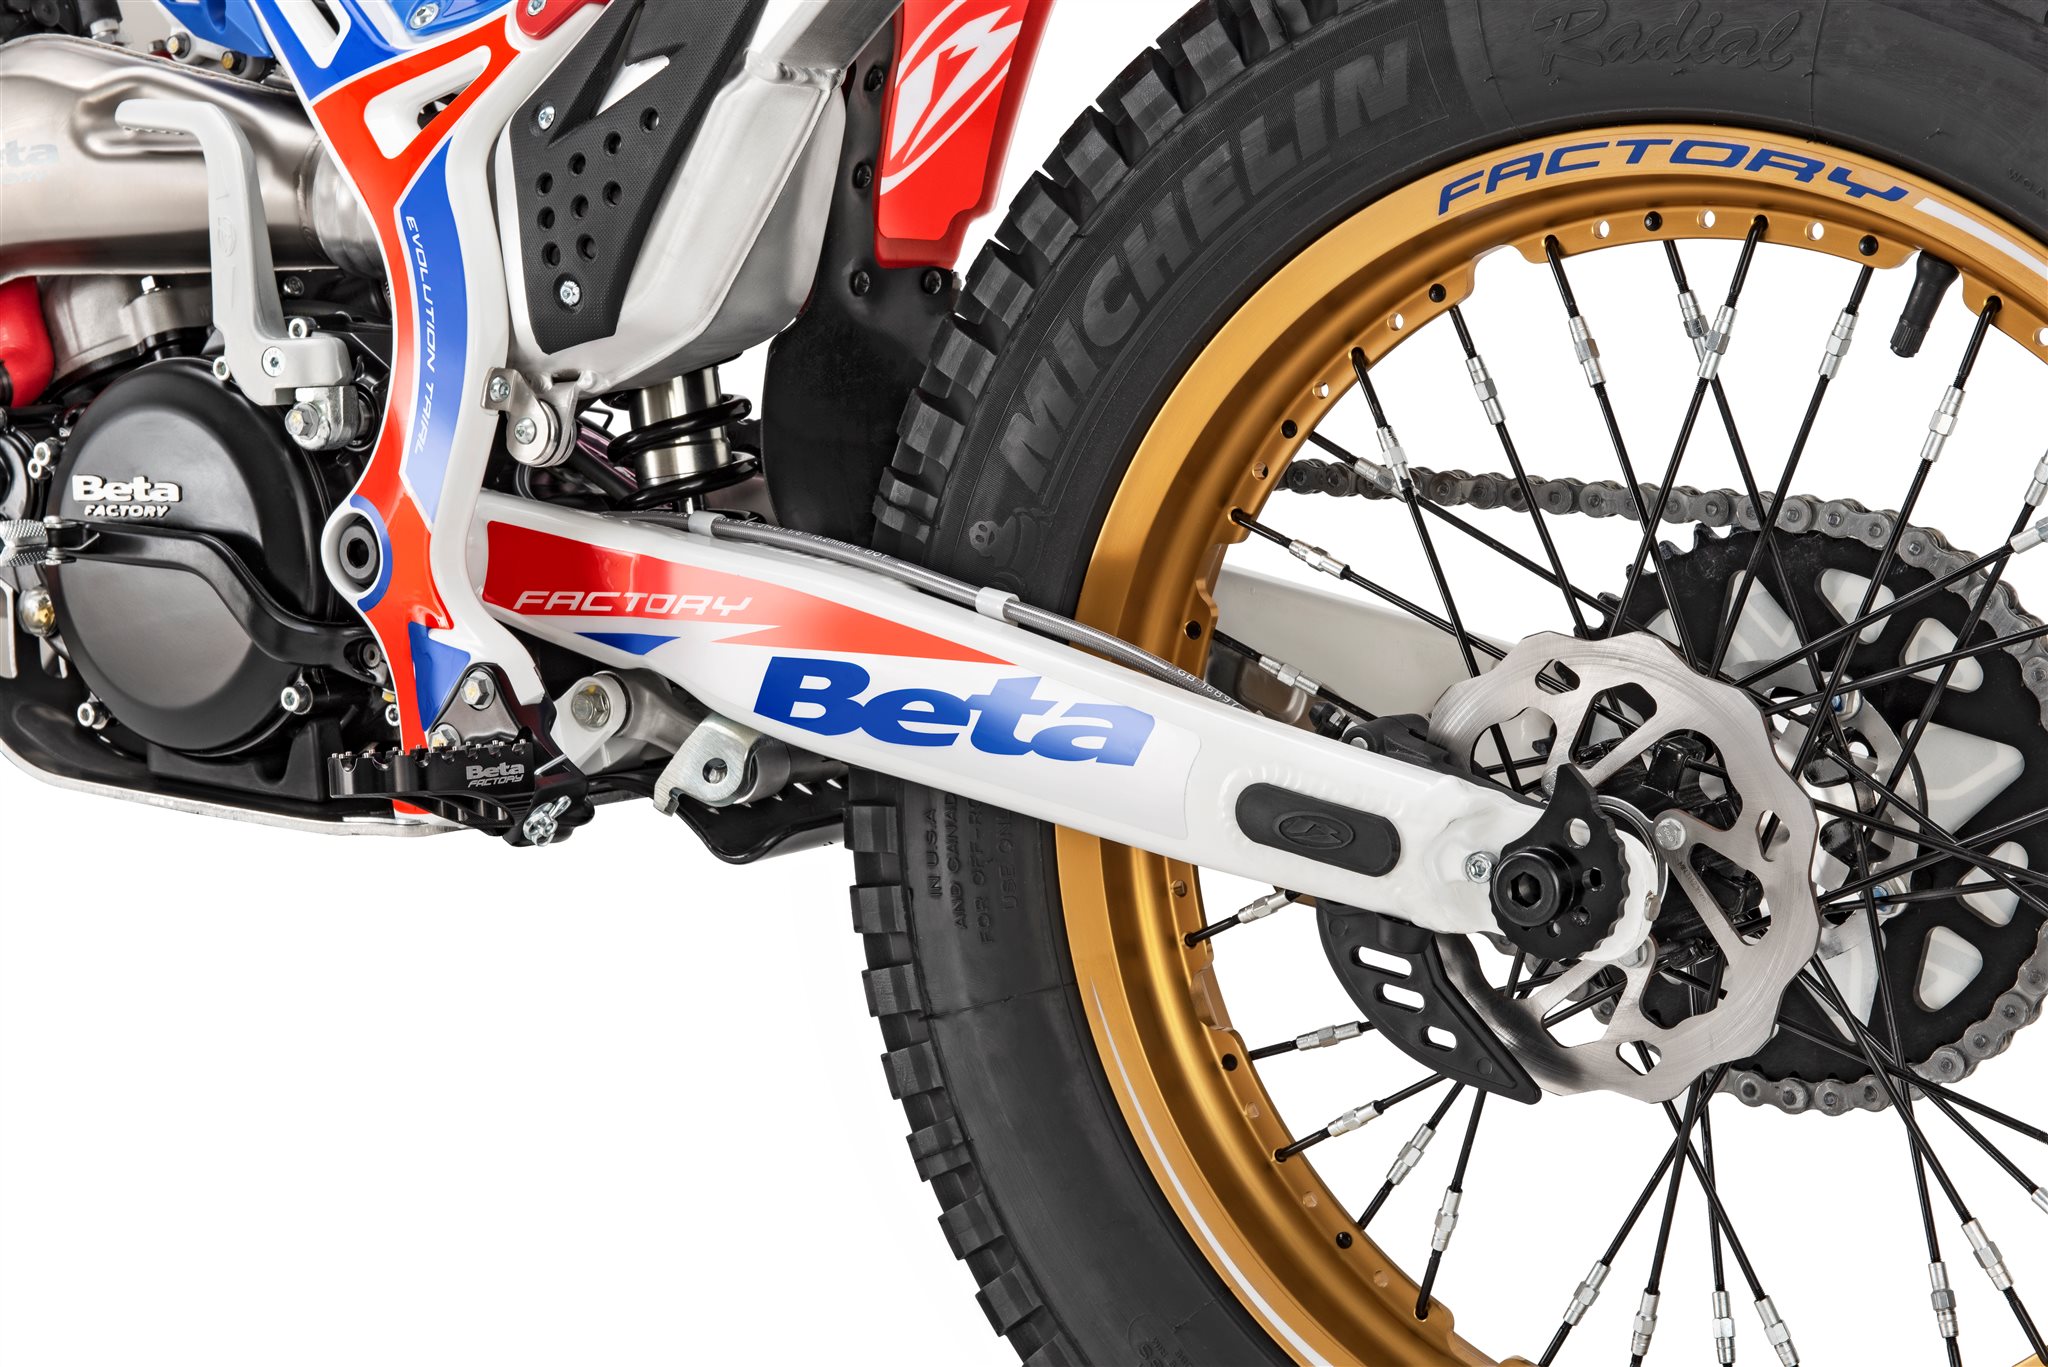 Бета (производитель мотоциклов) - beta (motorcycle manufacturer) - abcdef.wiki